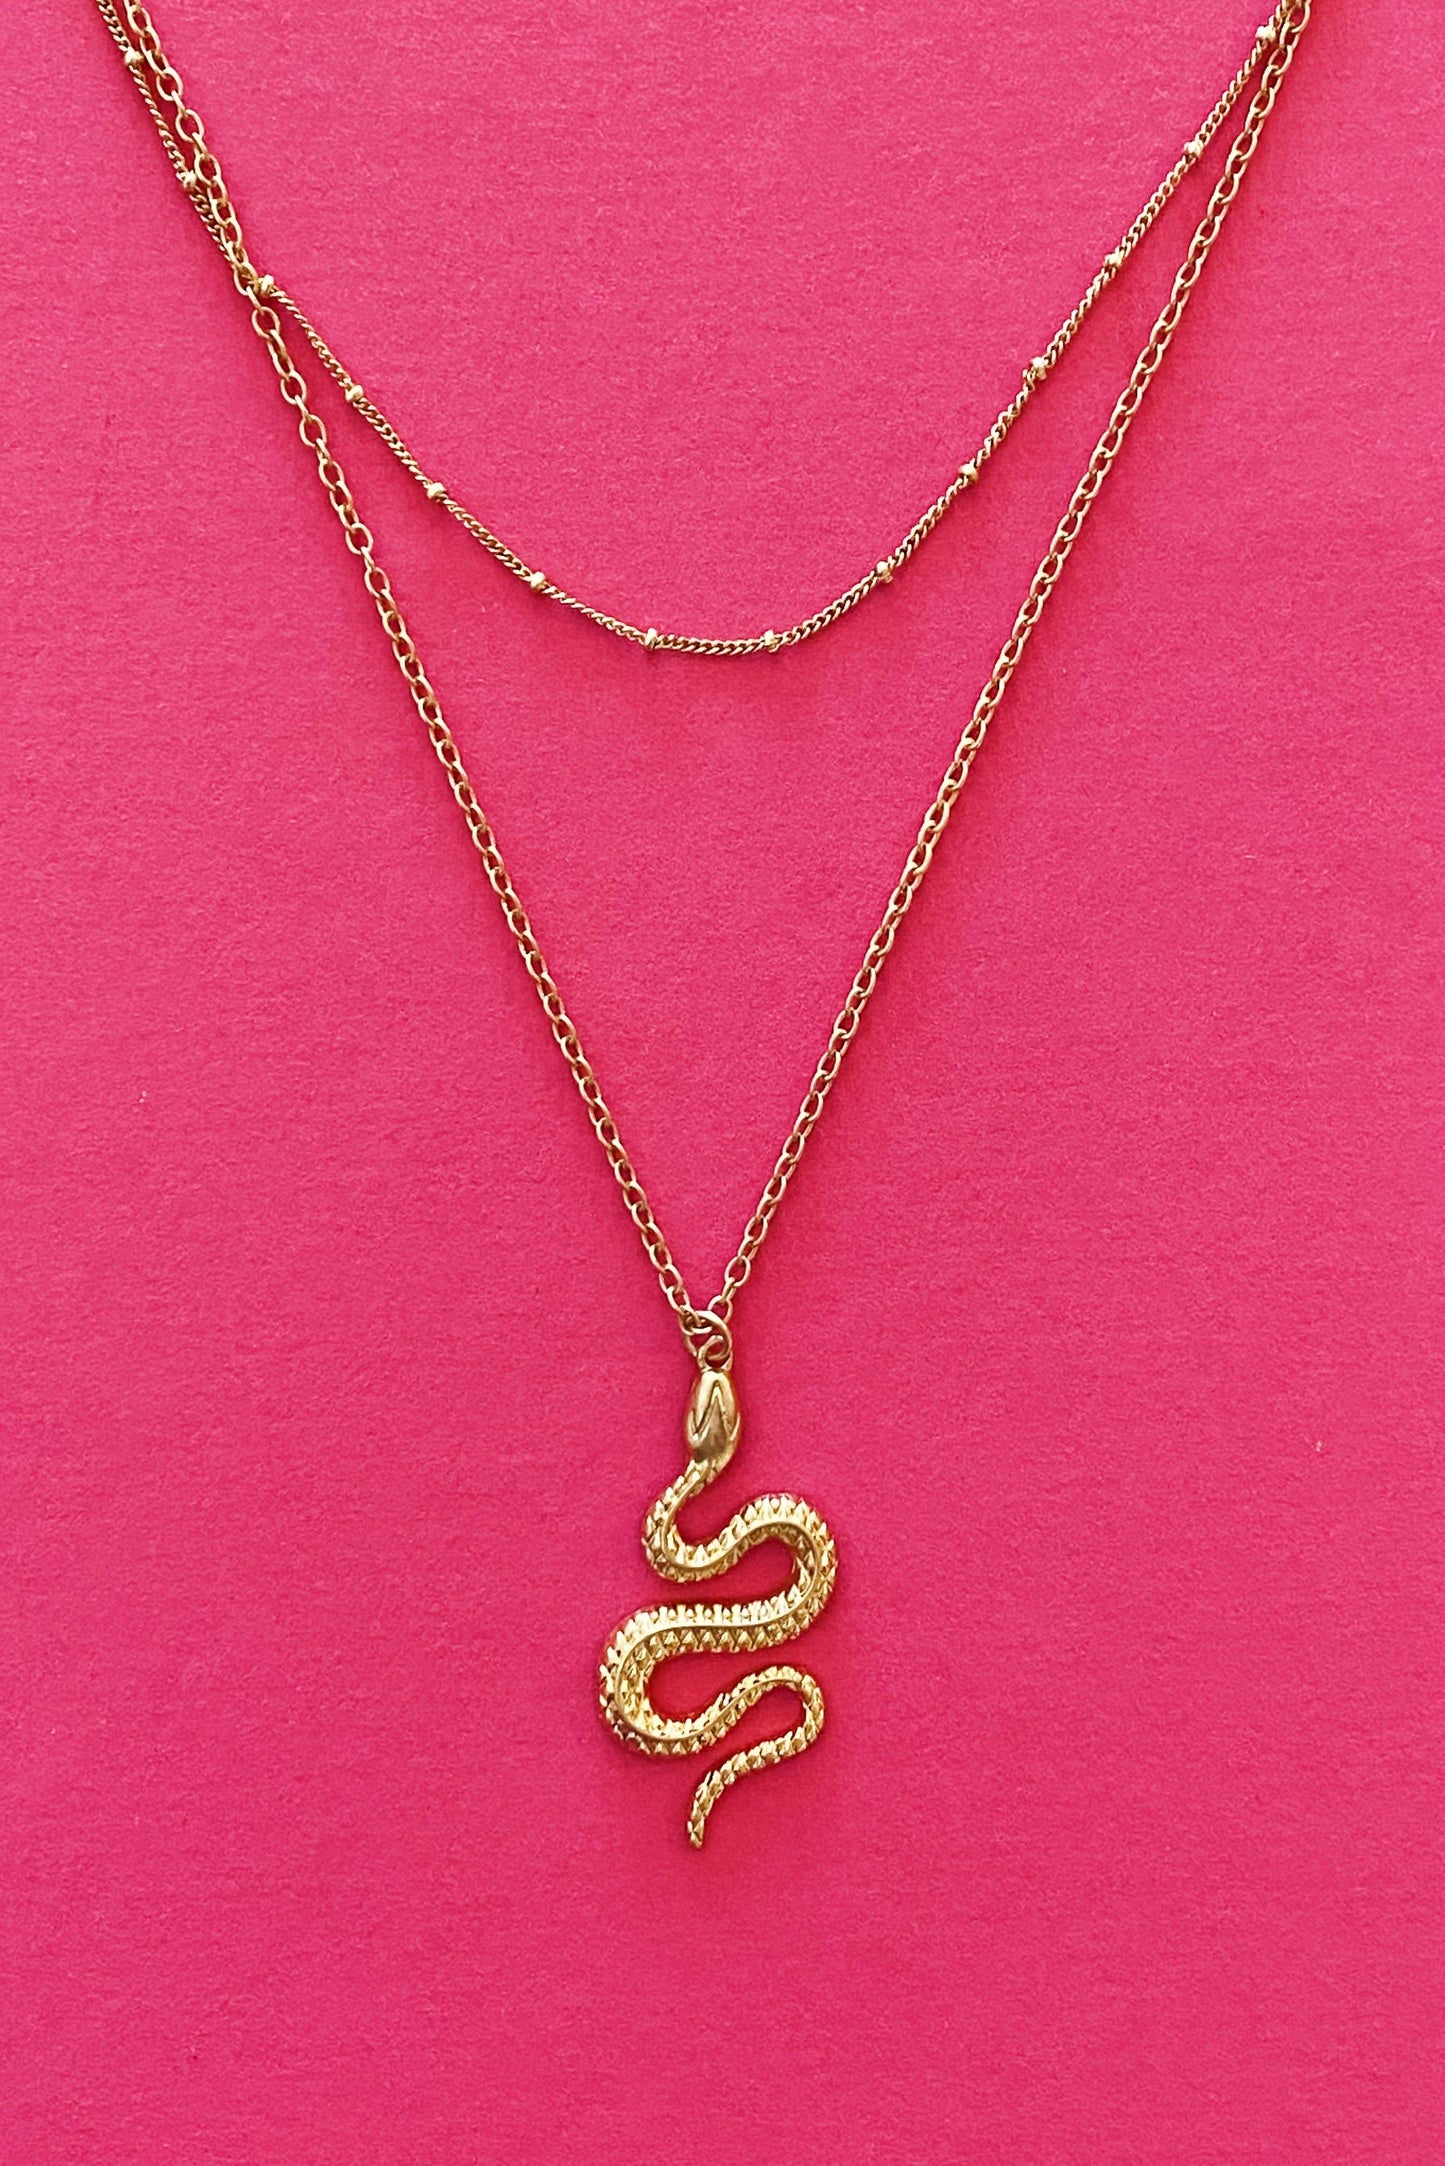 Serpent Queen Necklace, Gold